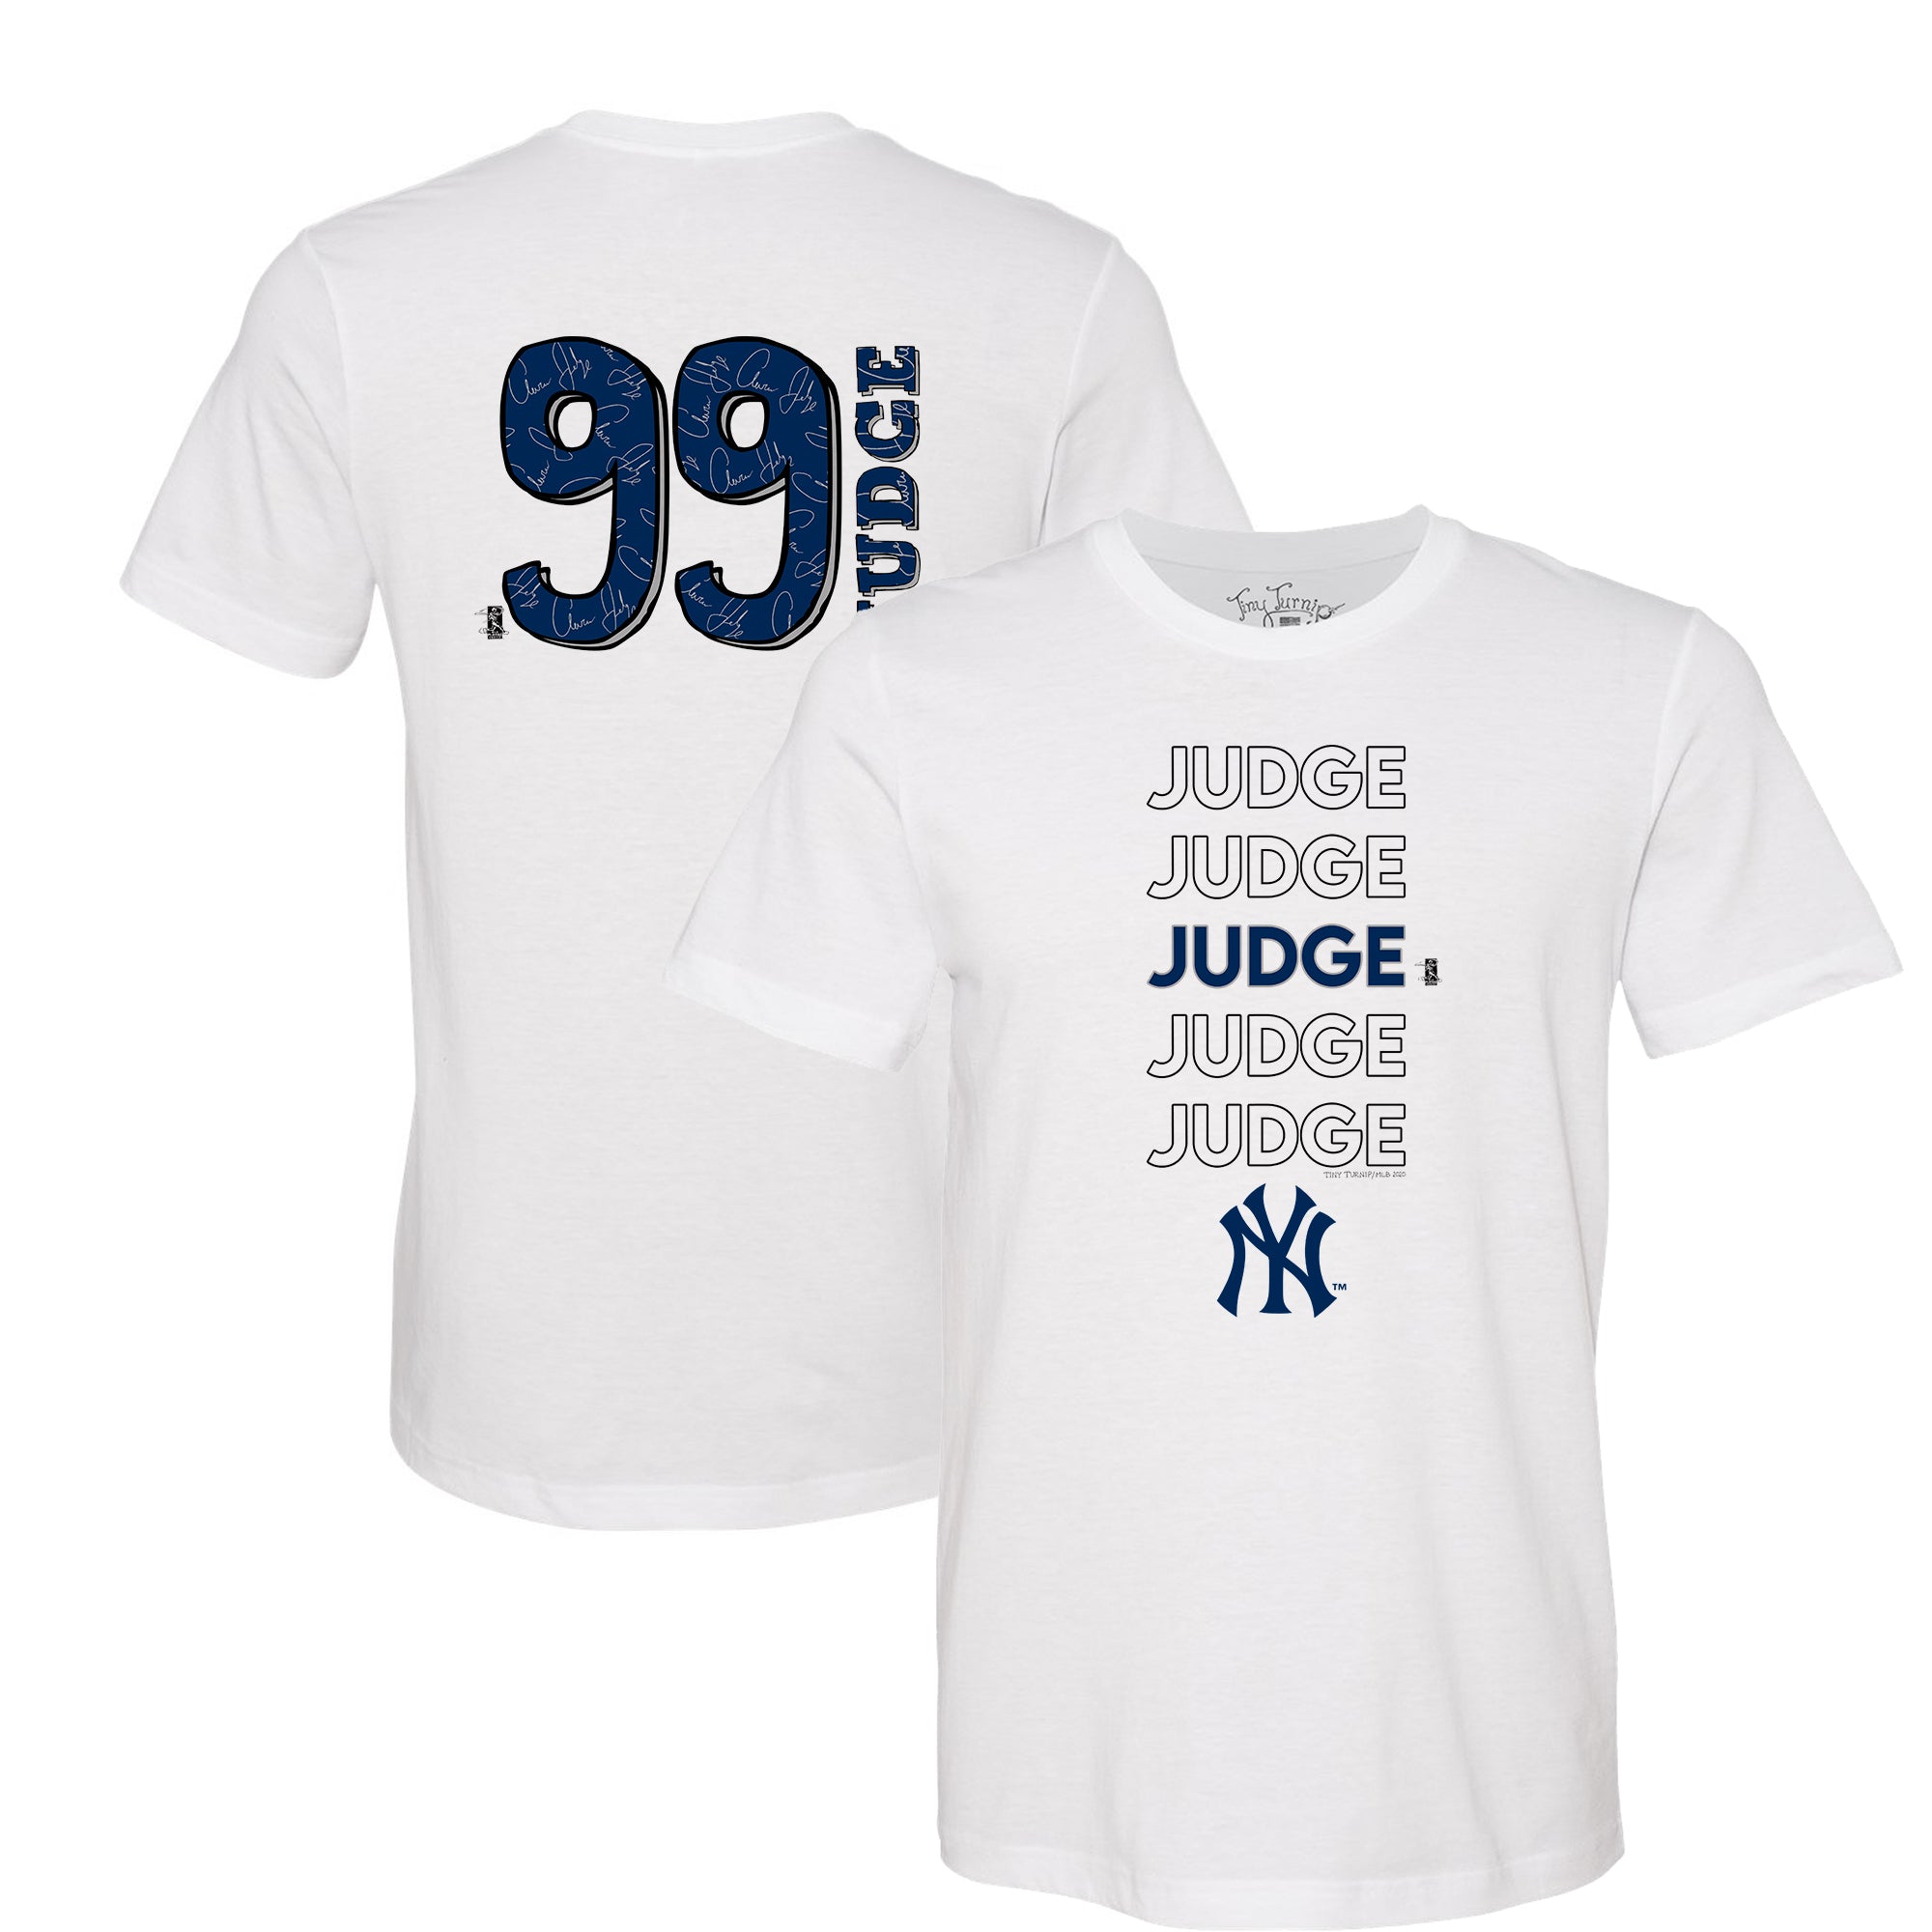  Aaron Judge Youth Shirt (Kids Shirt, 6-7Y Small, Tri